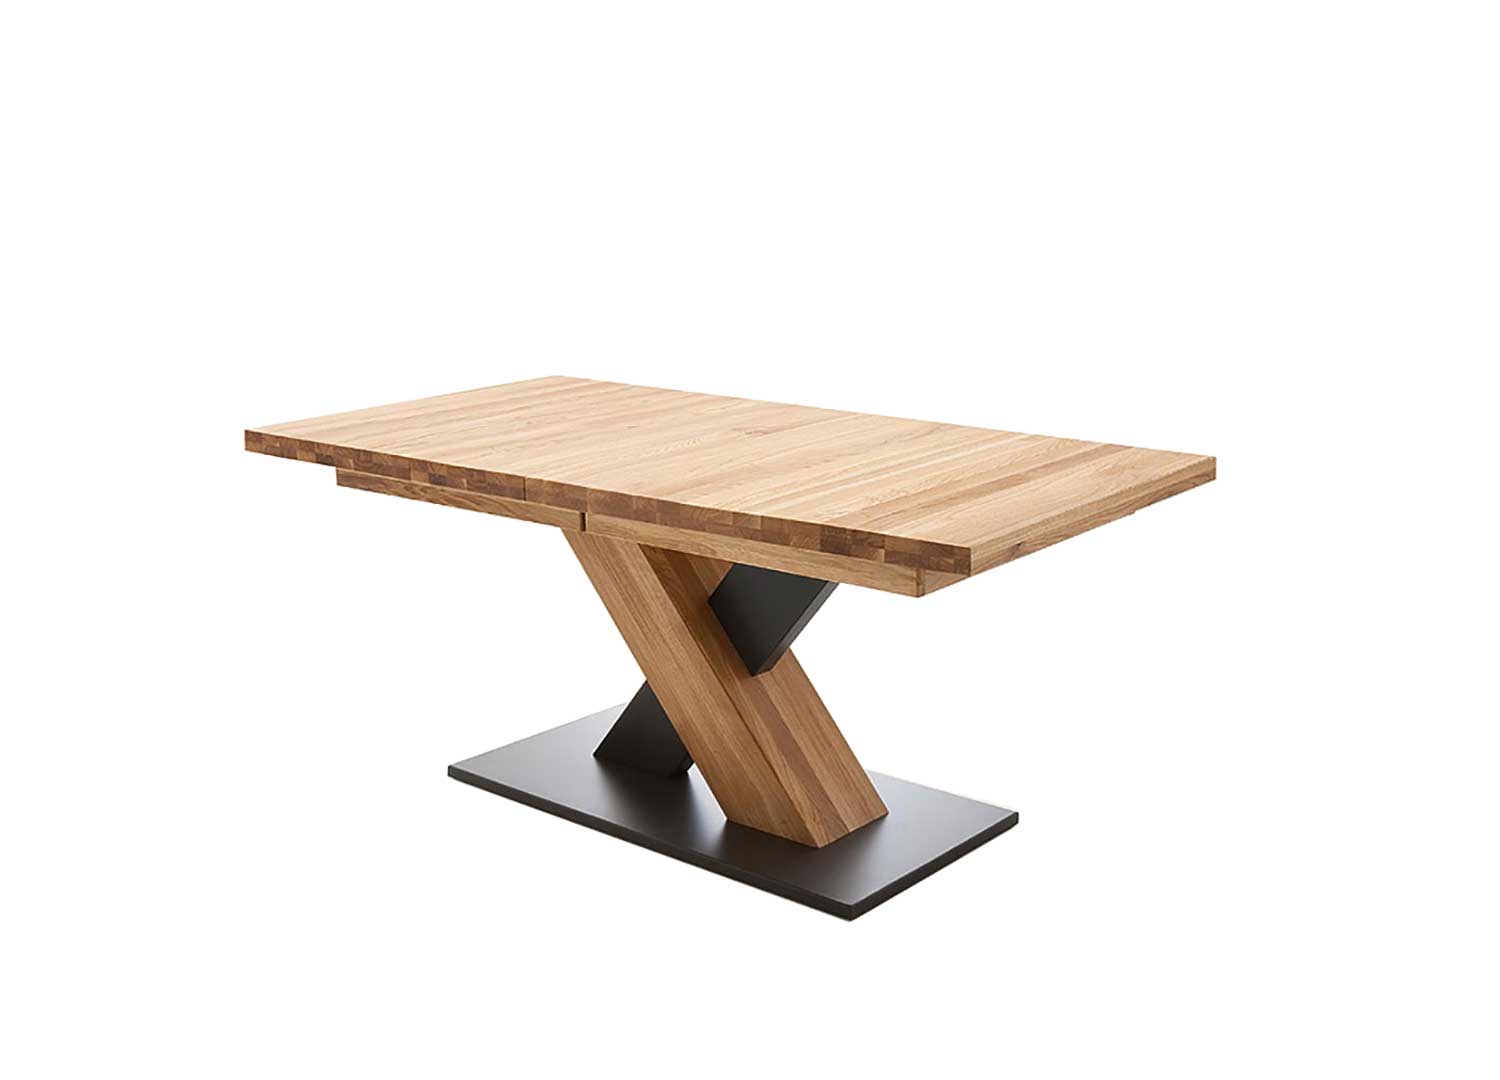 Can withstand Generosity apologize Table de salle à manger rectangulaire en bois massif extensible